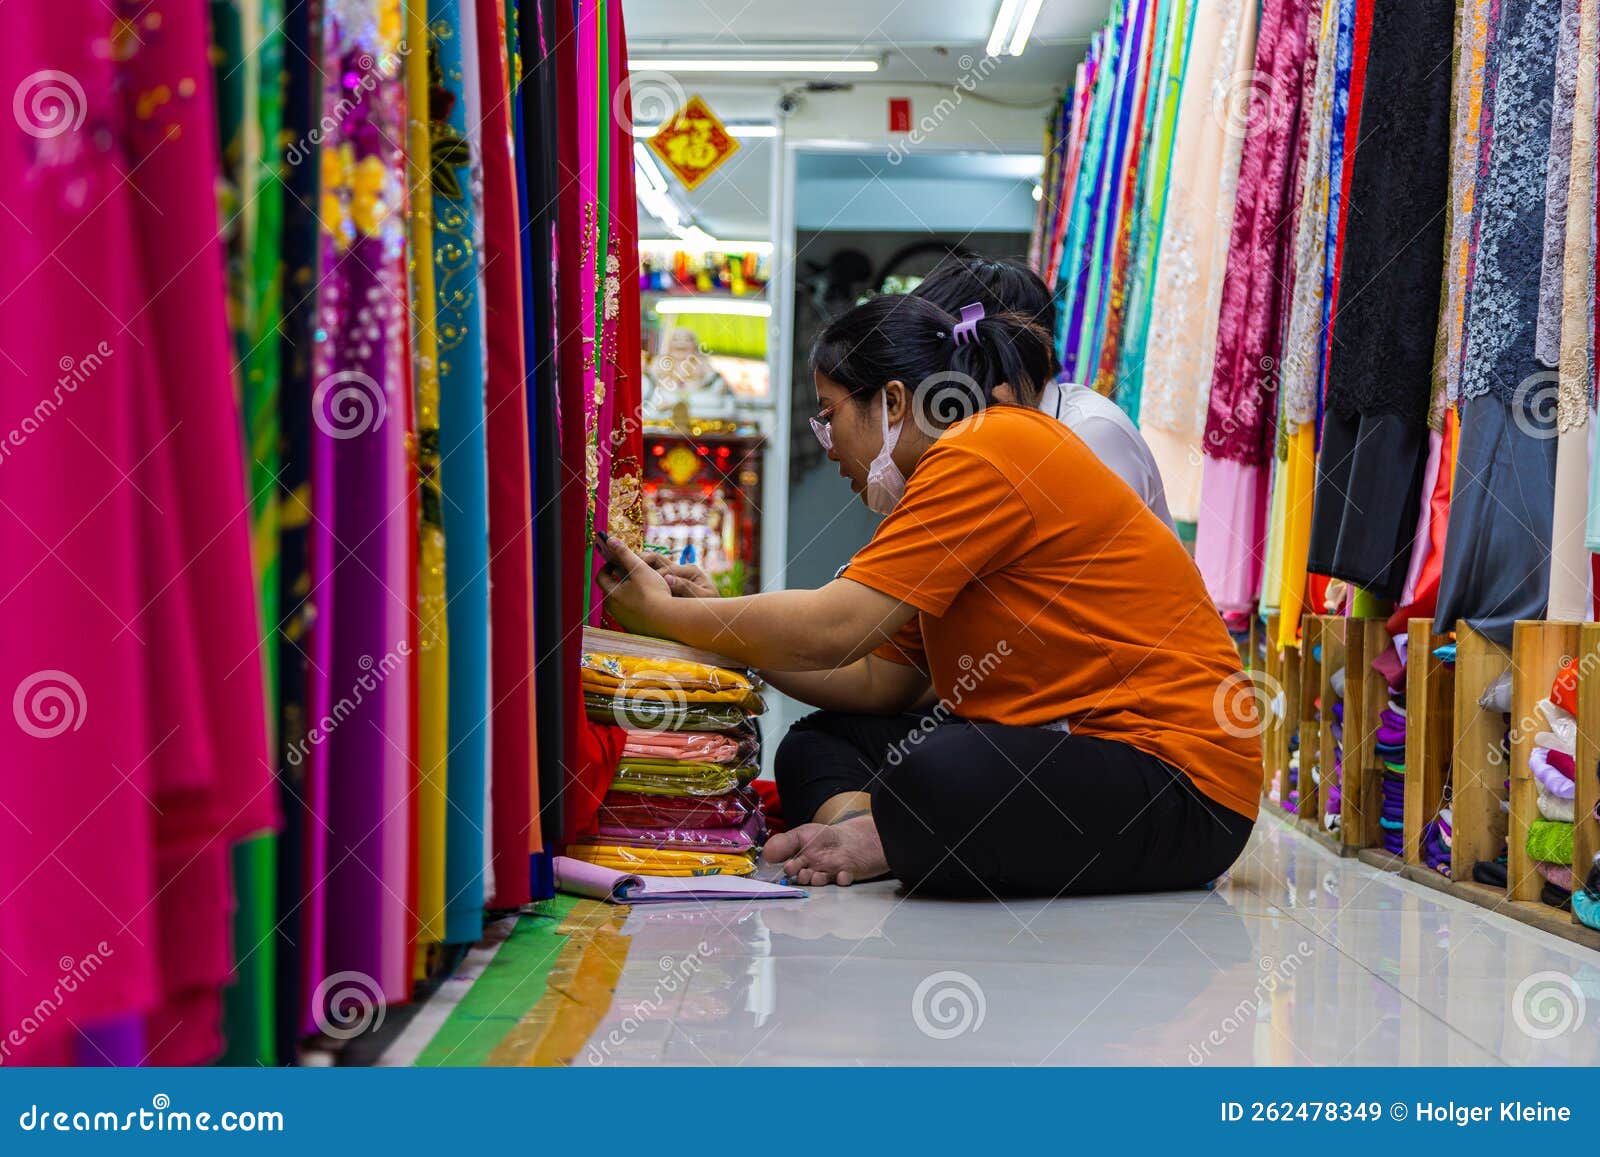 1,468 Textile Industry Vietnam Images, Stock Photos, 3D objects, & Vectors